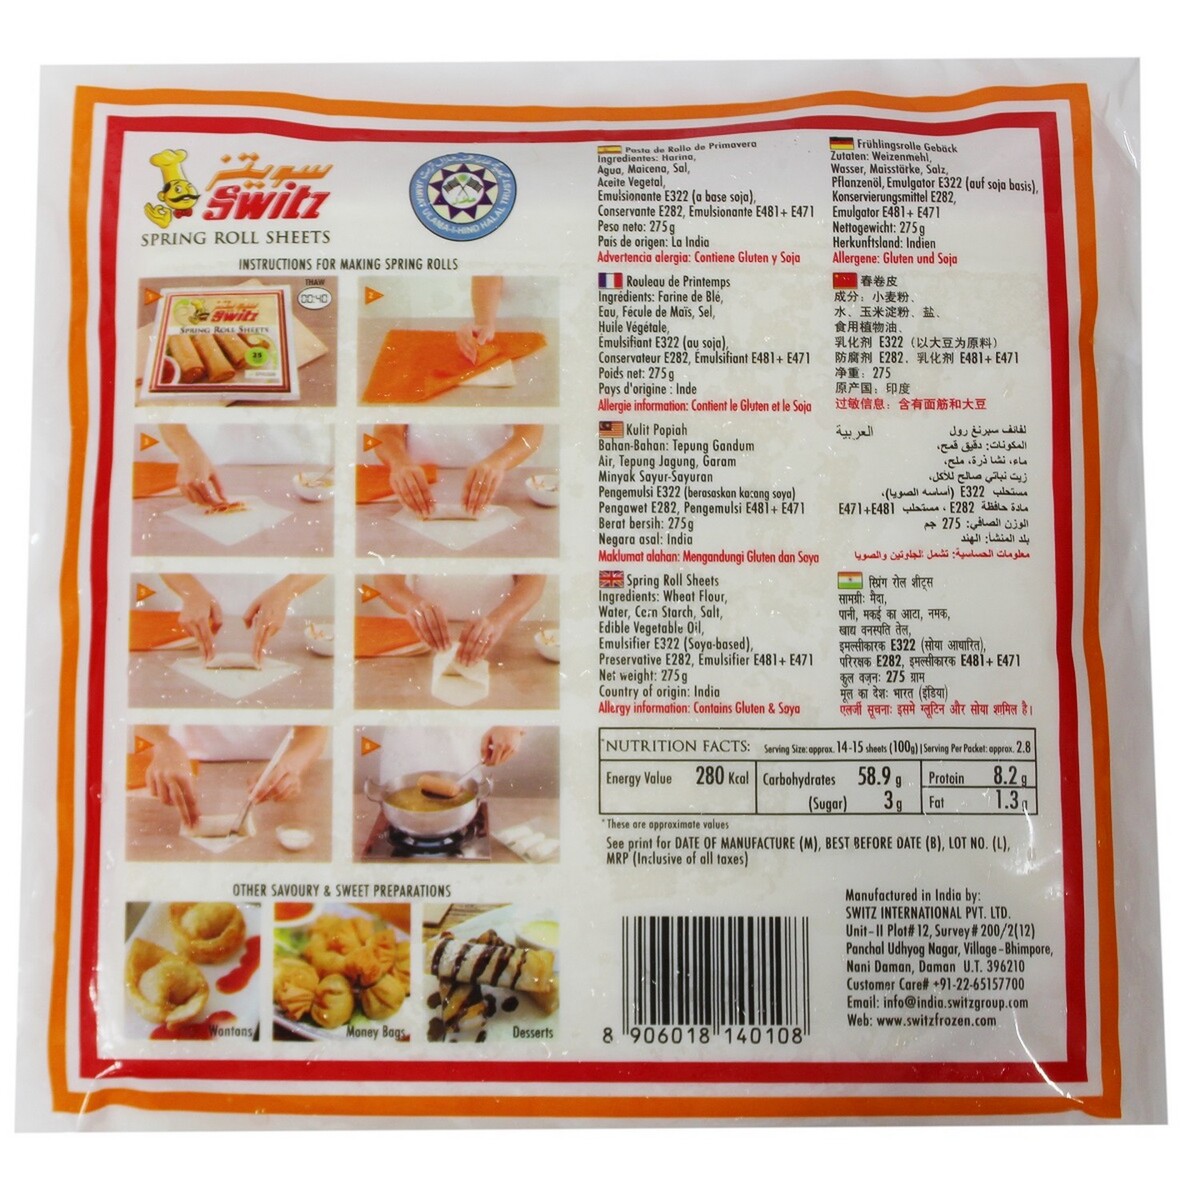 Switz Spring Roll Sheets 40's 6 x 6 275g